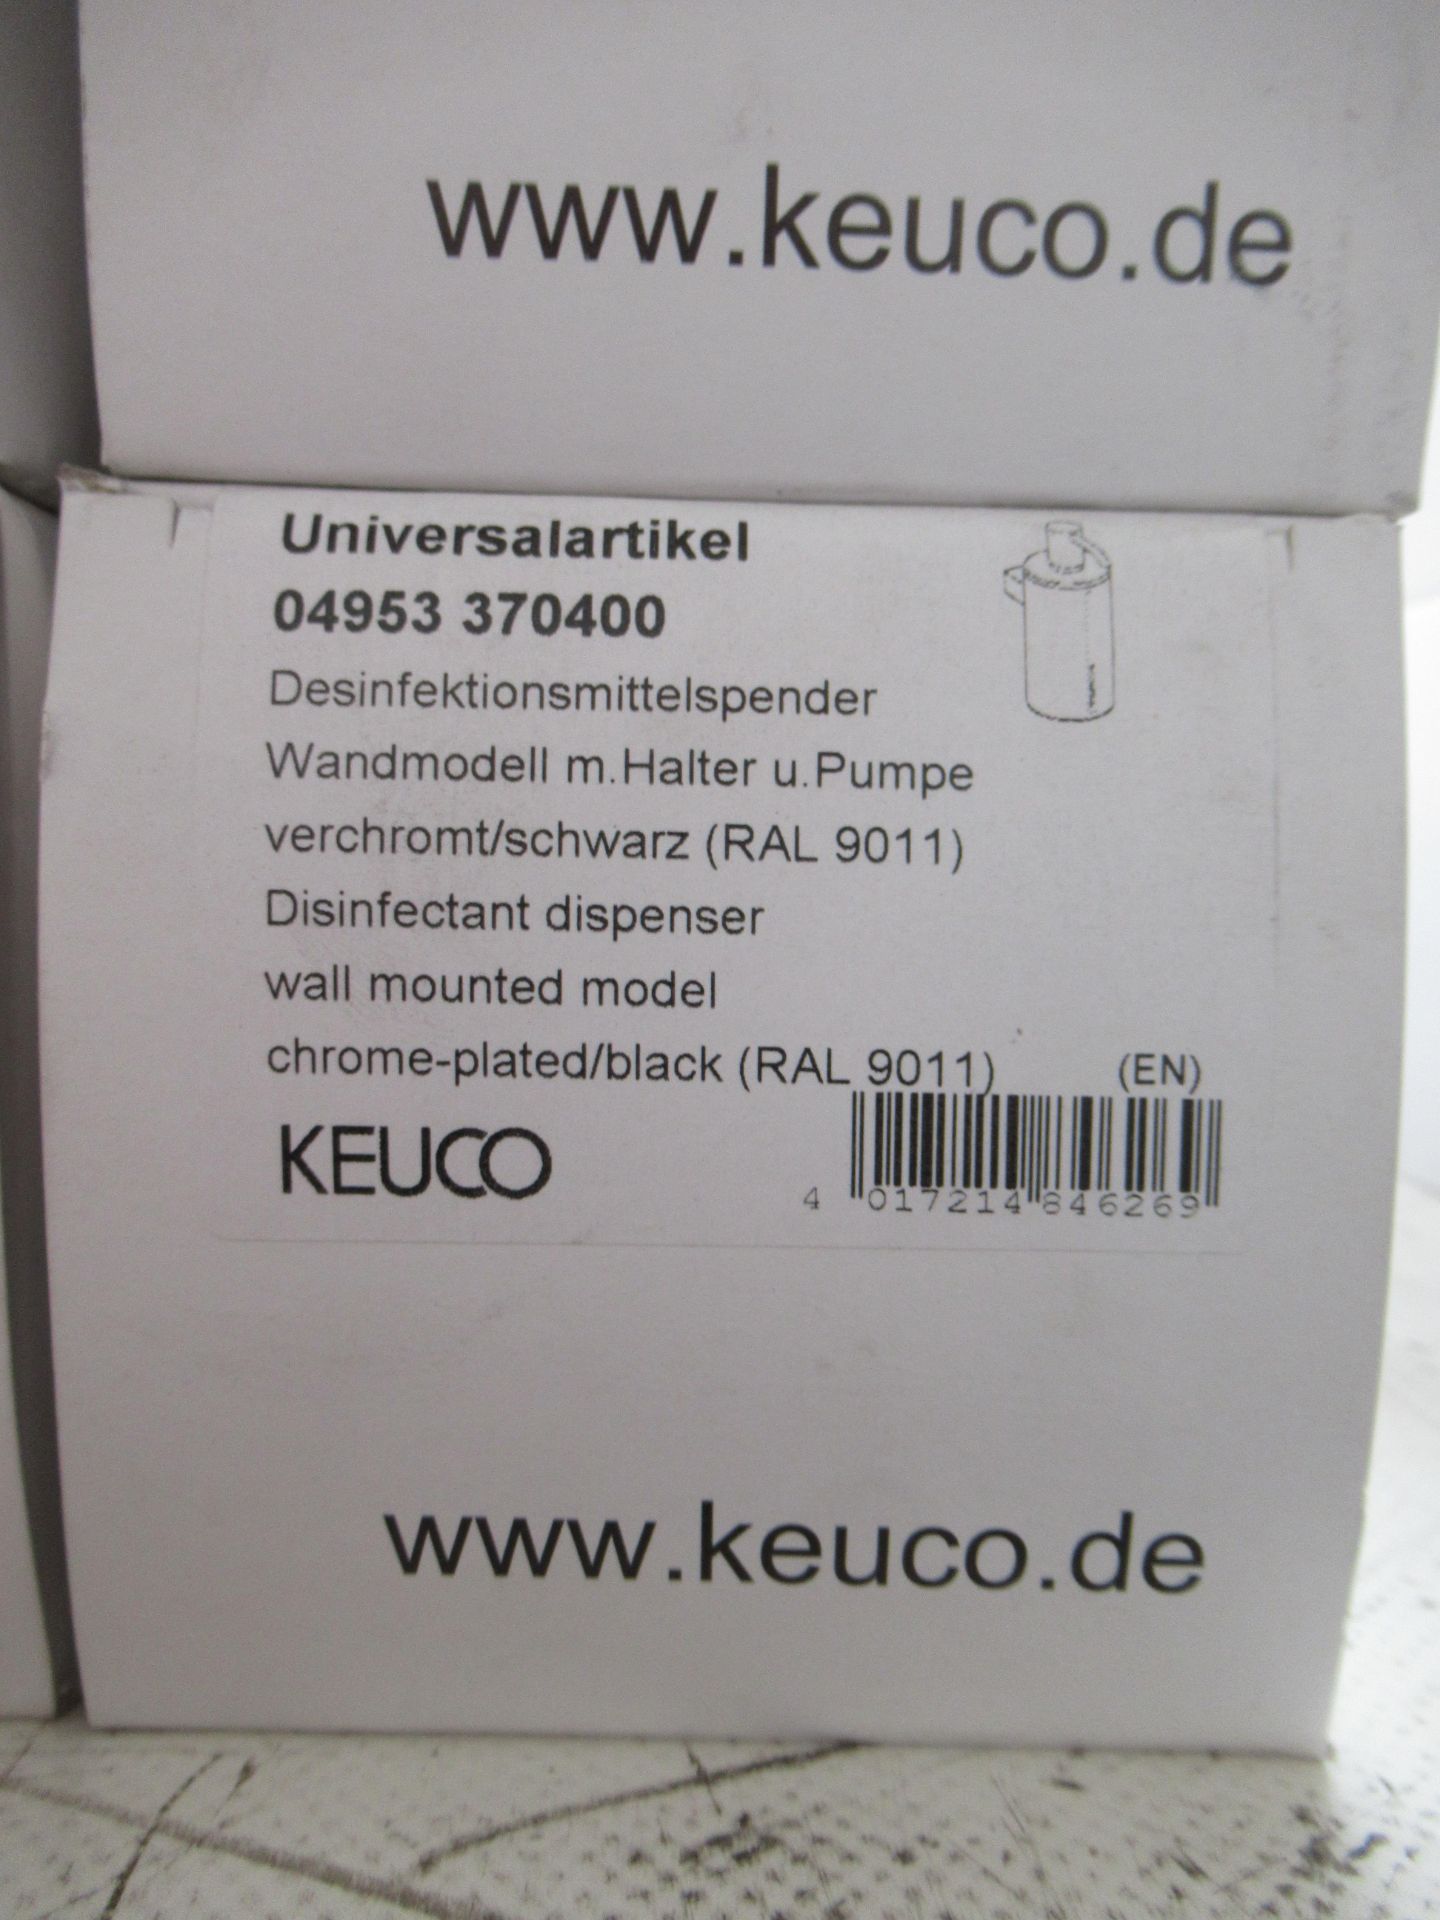 A Keuco Disinfectant Dispenser, Chrome Plated/Black, P/N 04952-370400